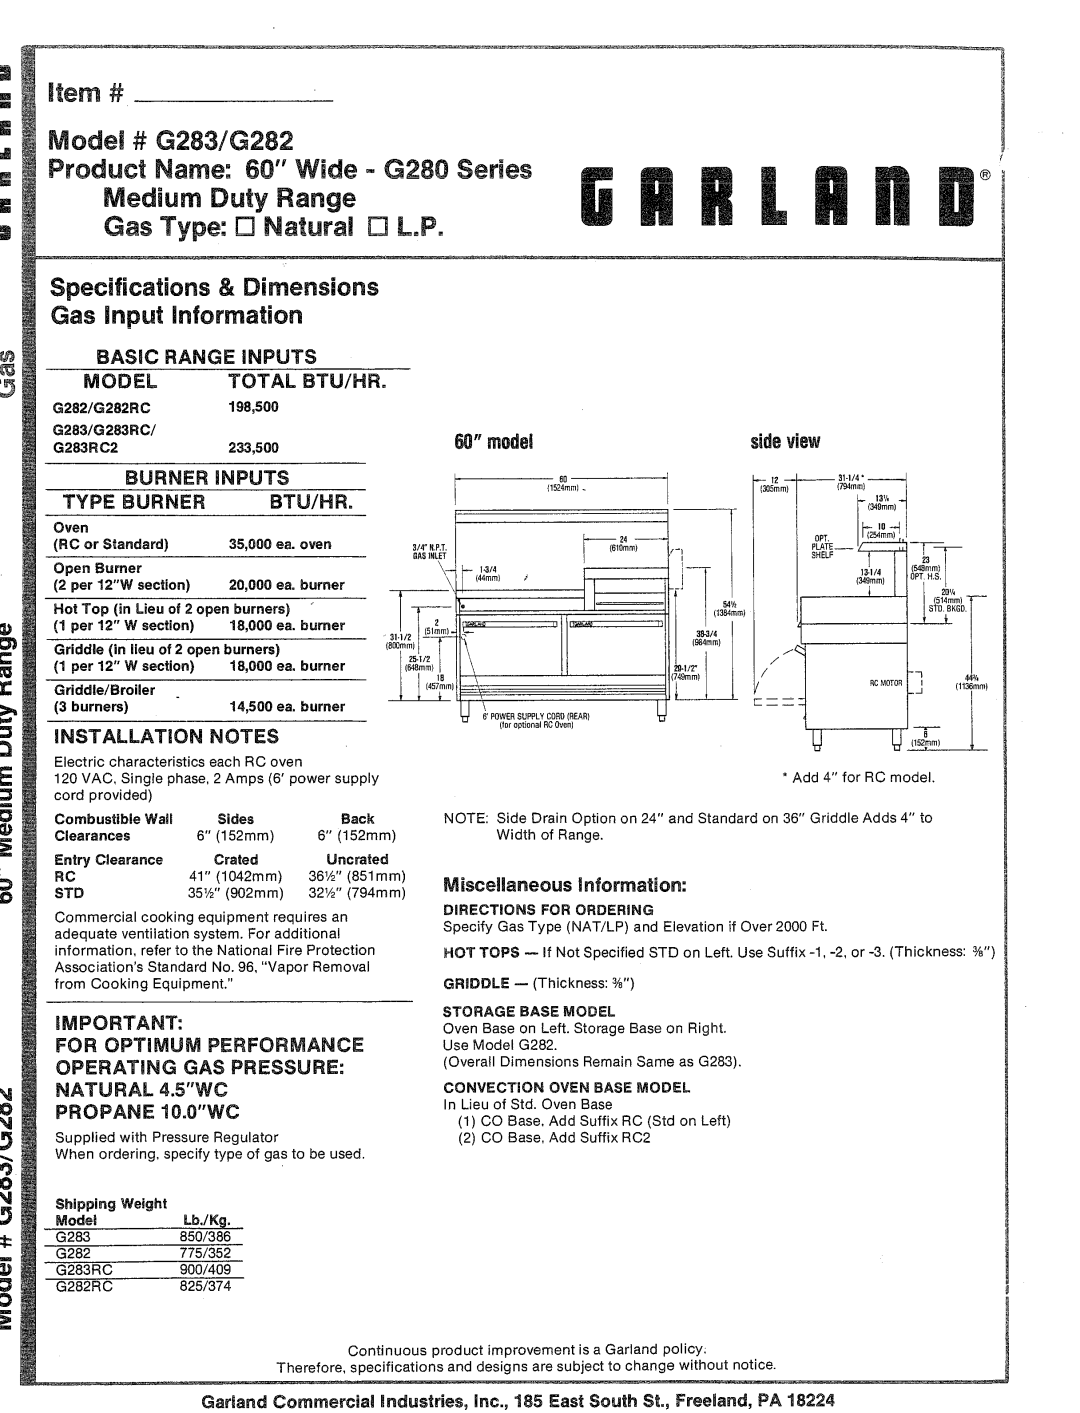 Garland G283 manual 